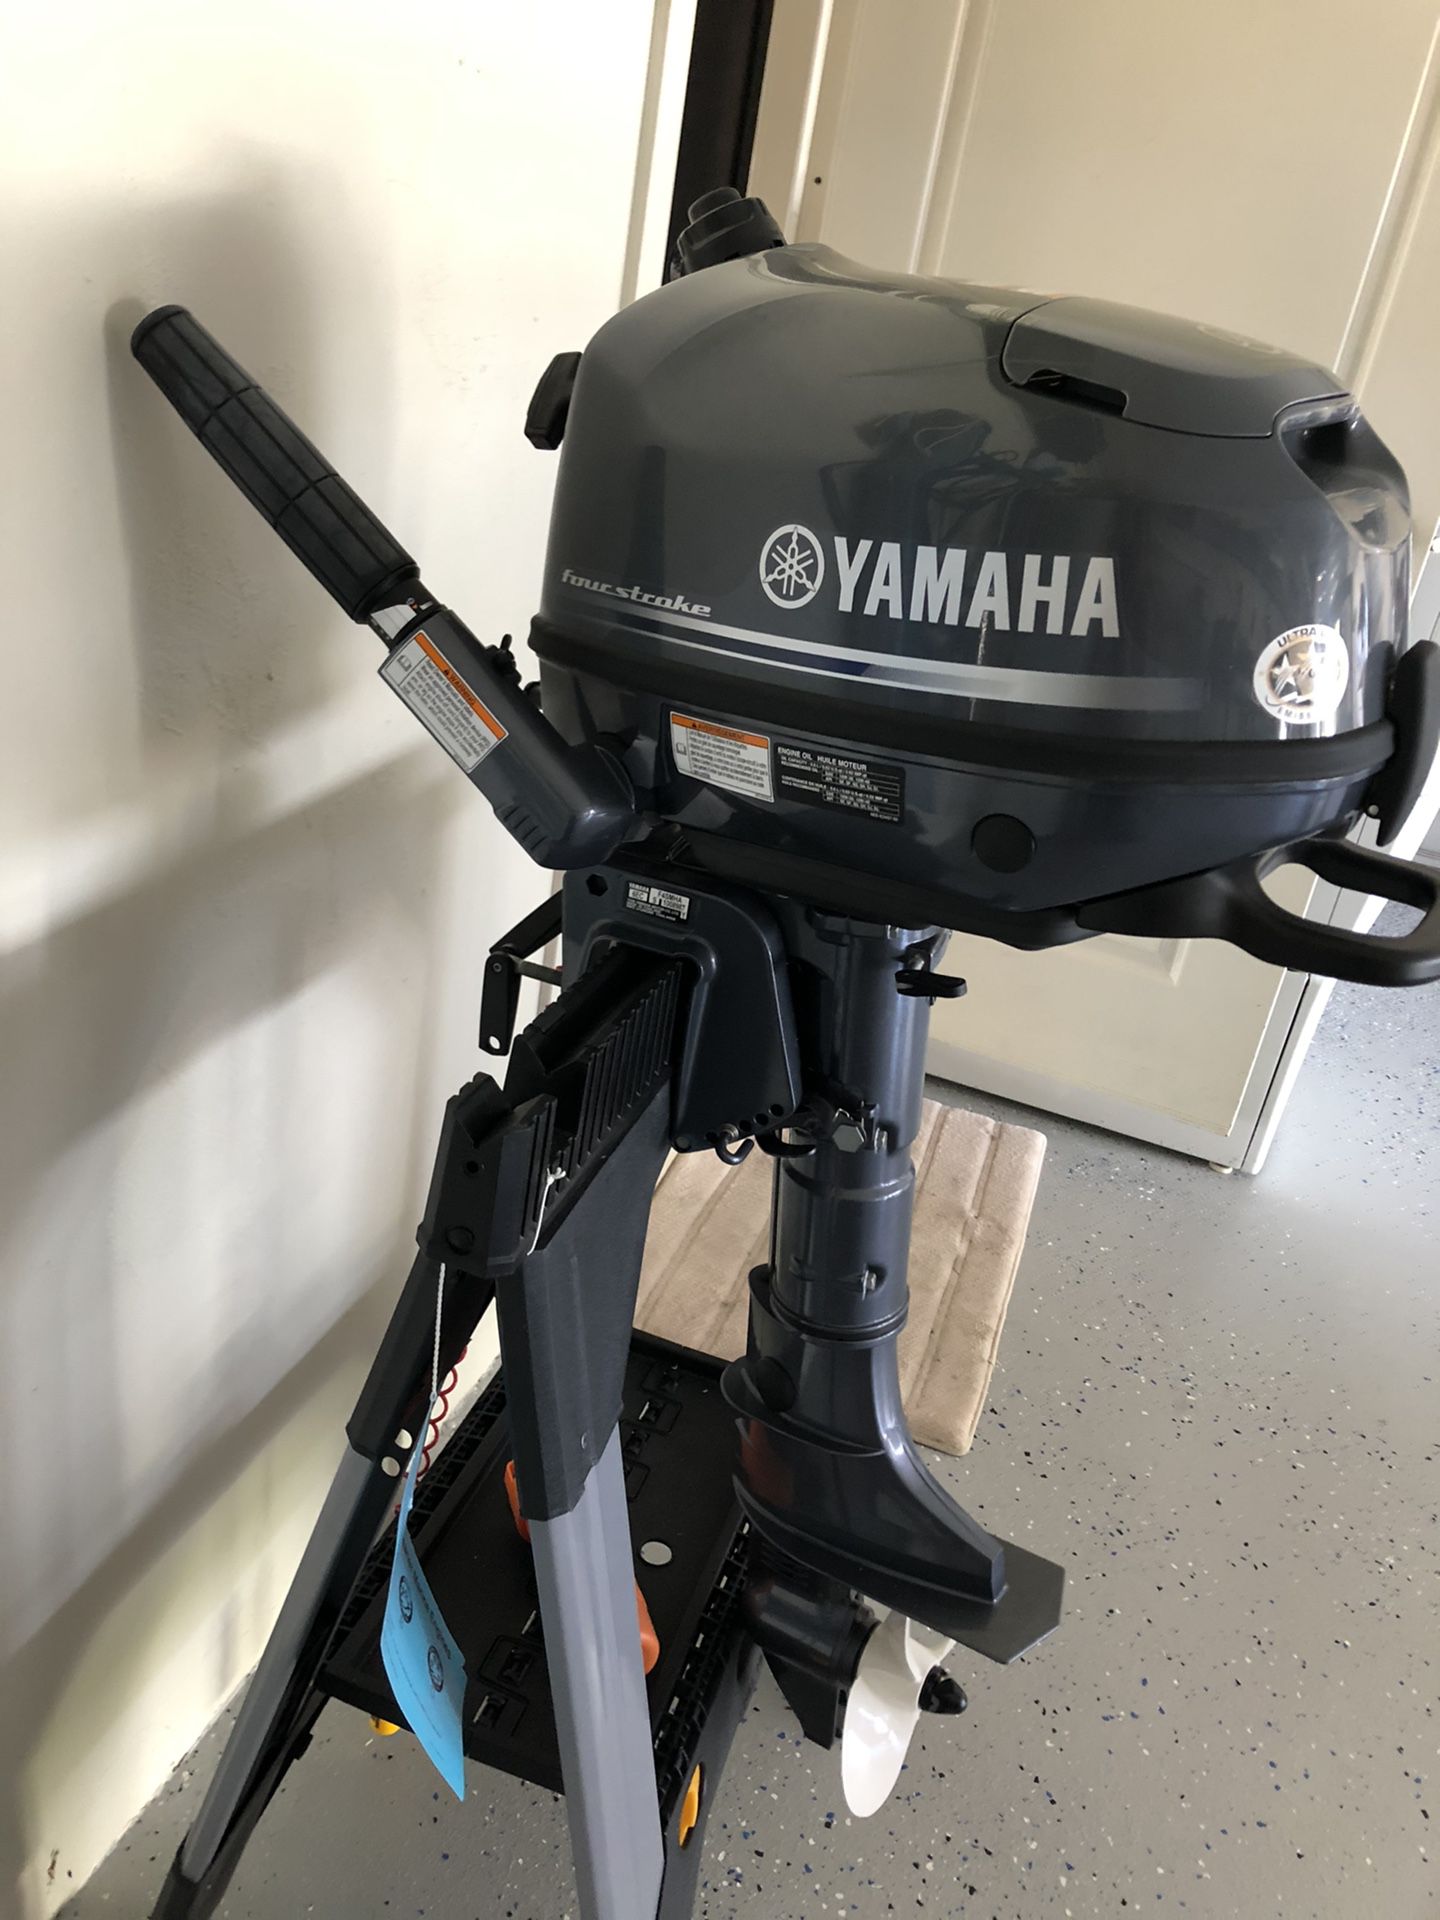 Outboard Yamaha motor